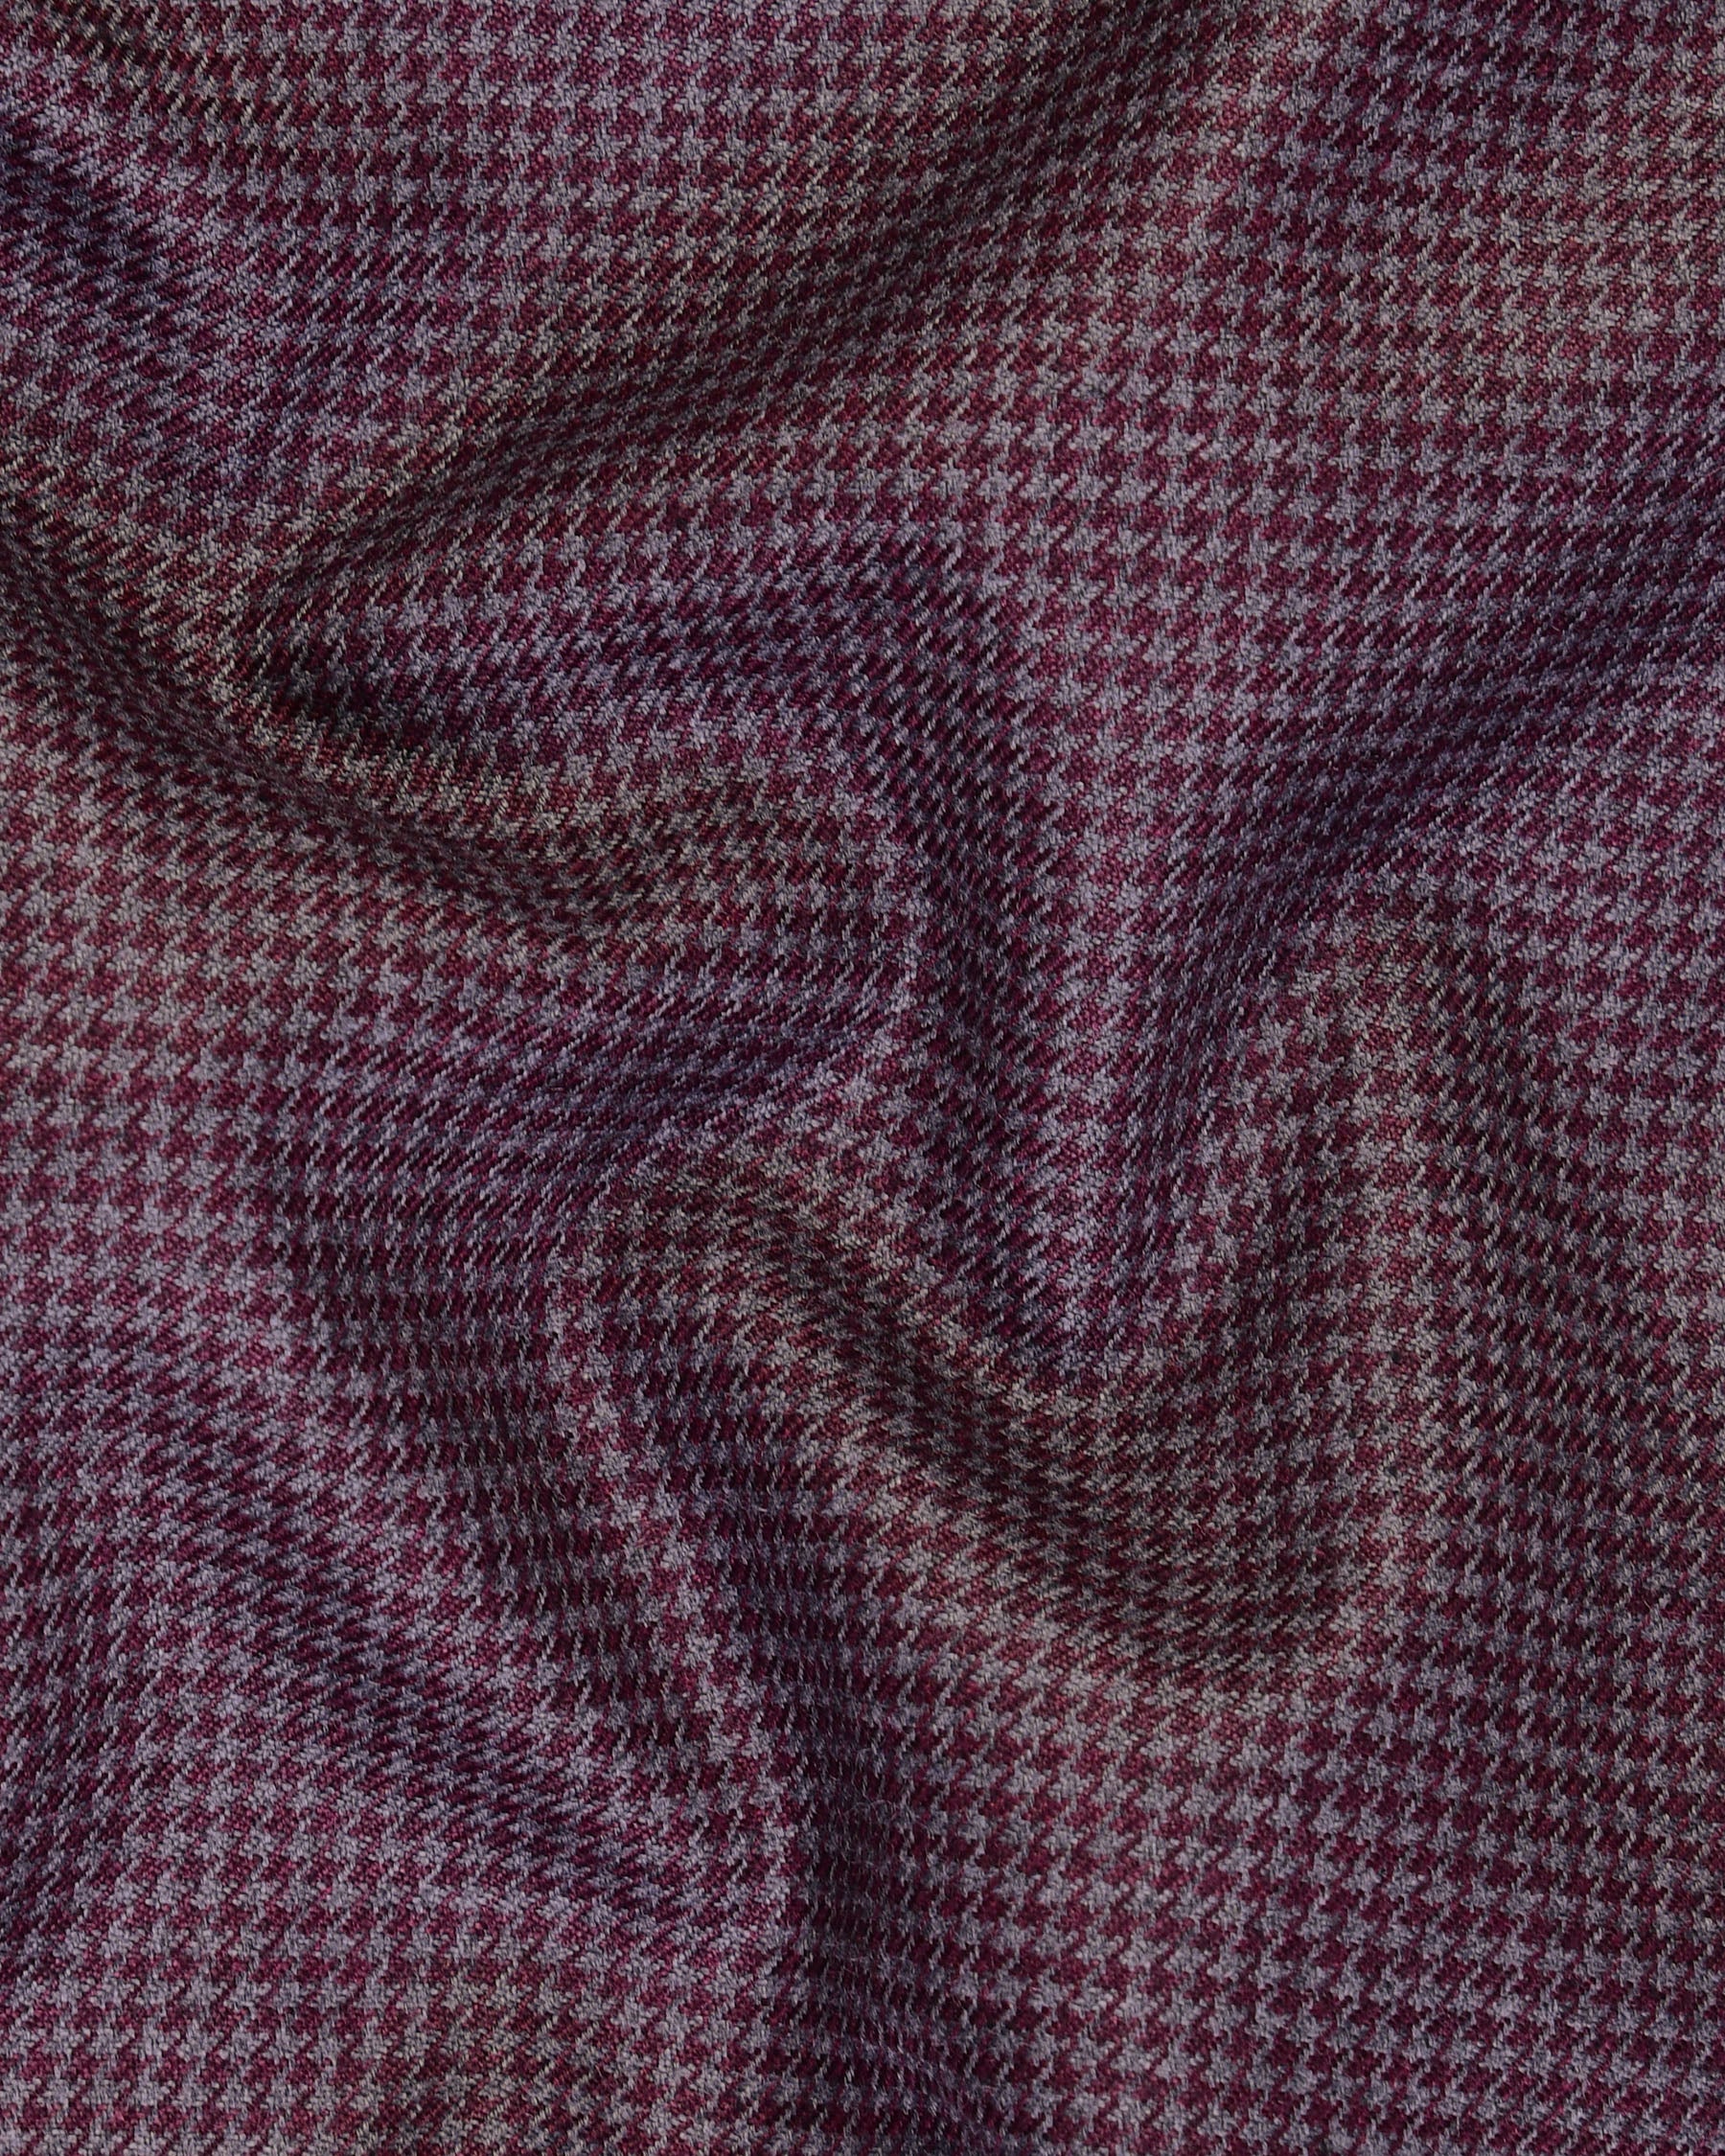 Wine Berry WoolRich Houndstooth Textured Waistcoat